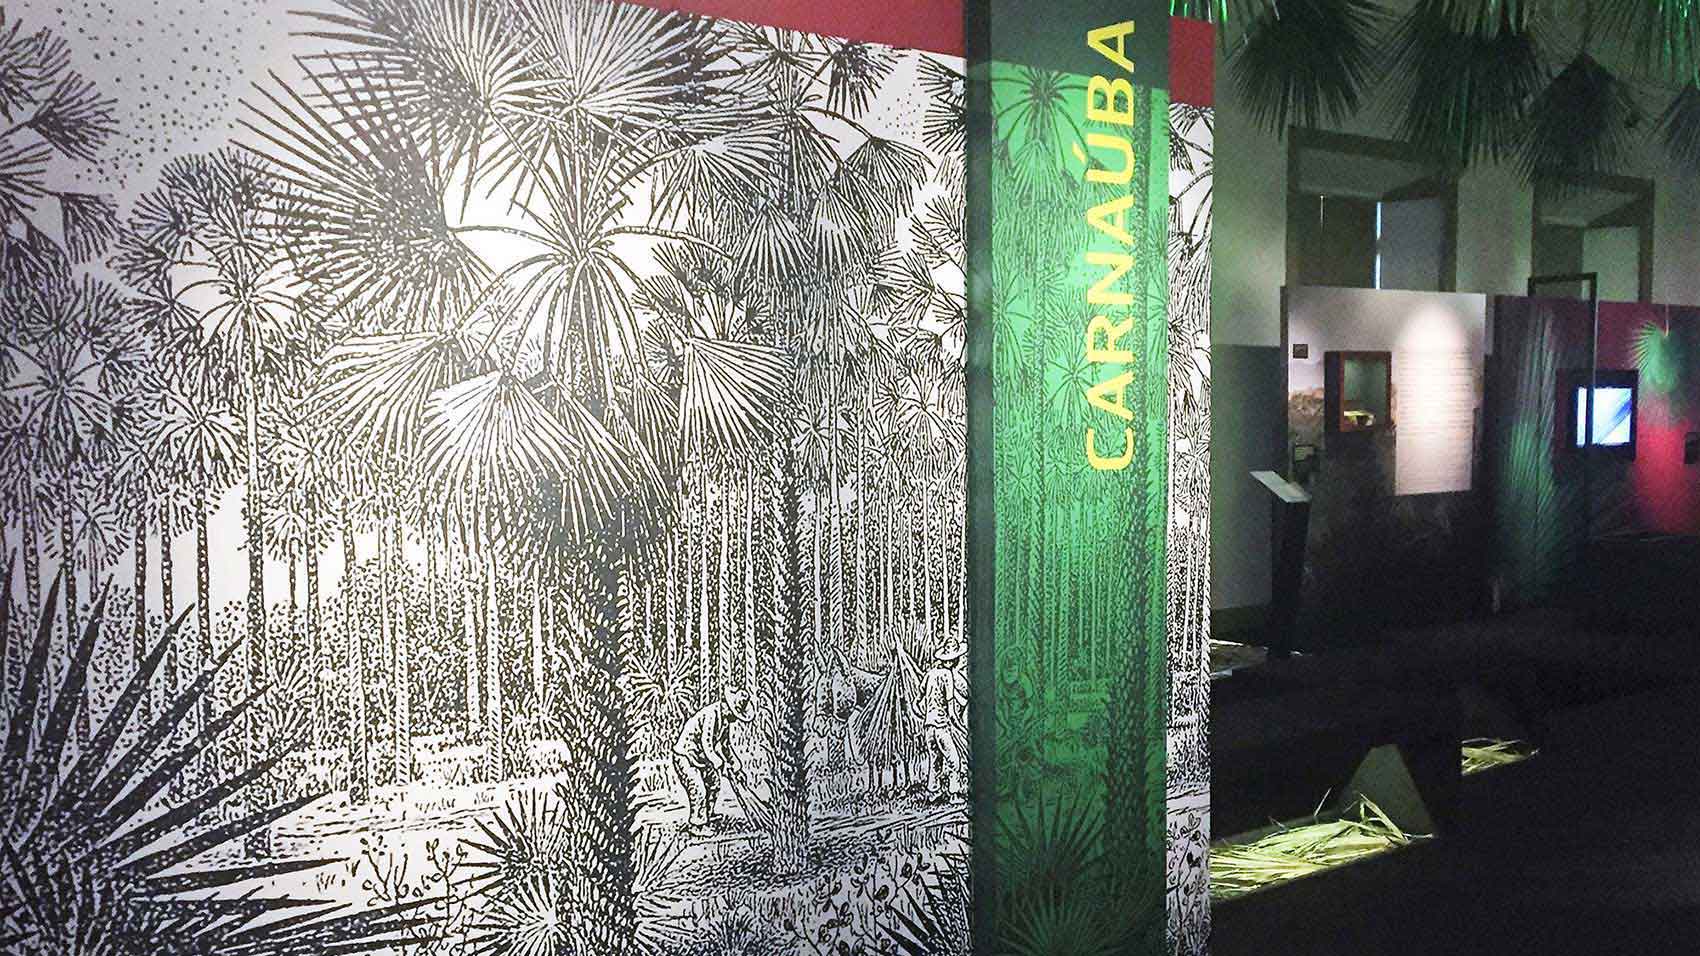 The “Carnaúba: Tree of Life” exhibit in Fortaleza, Brazil